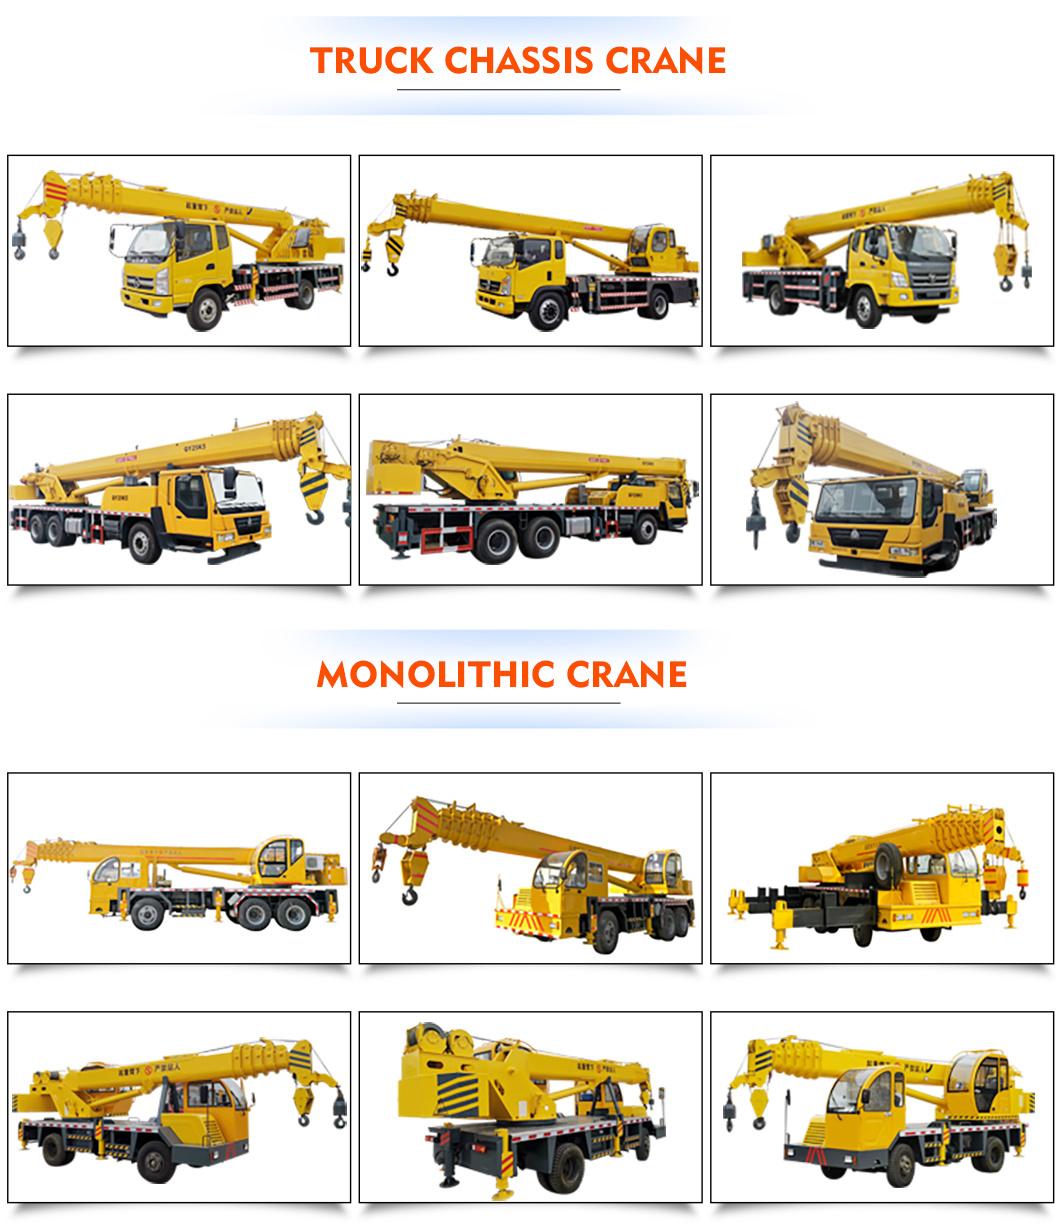 Professional Manufacturer Lifting Equipment Trailer Crane Small Crane Truck Truck Cranes for Sale